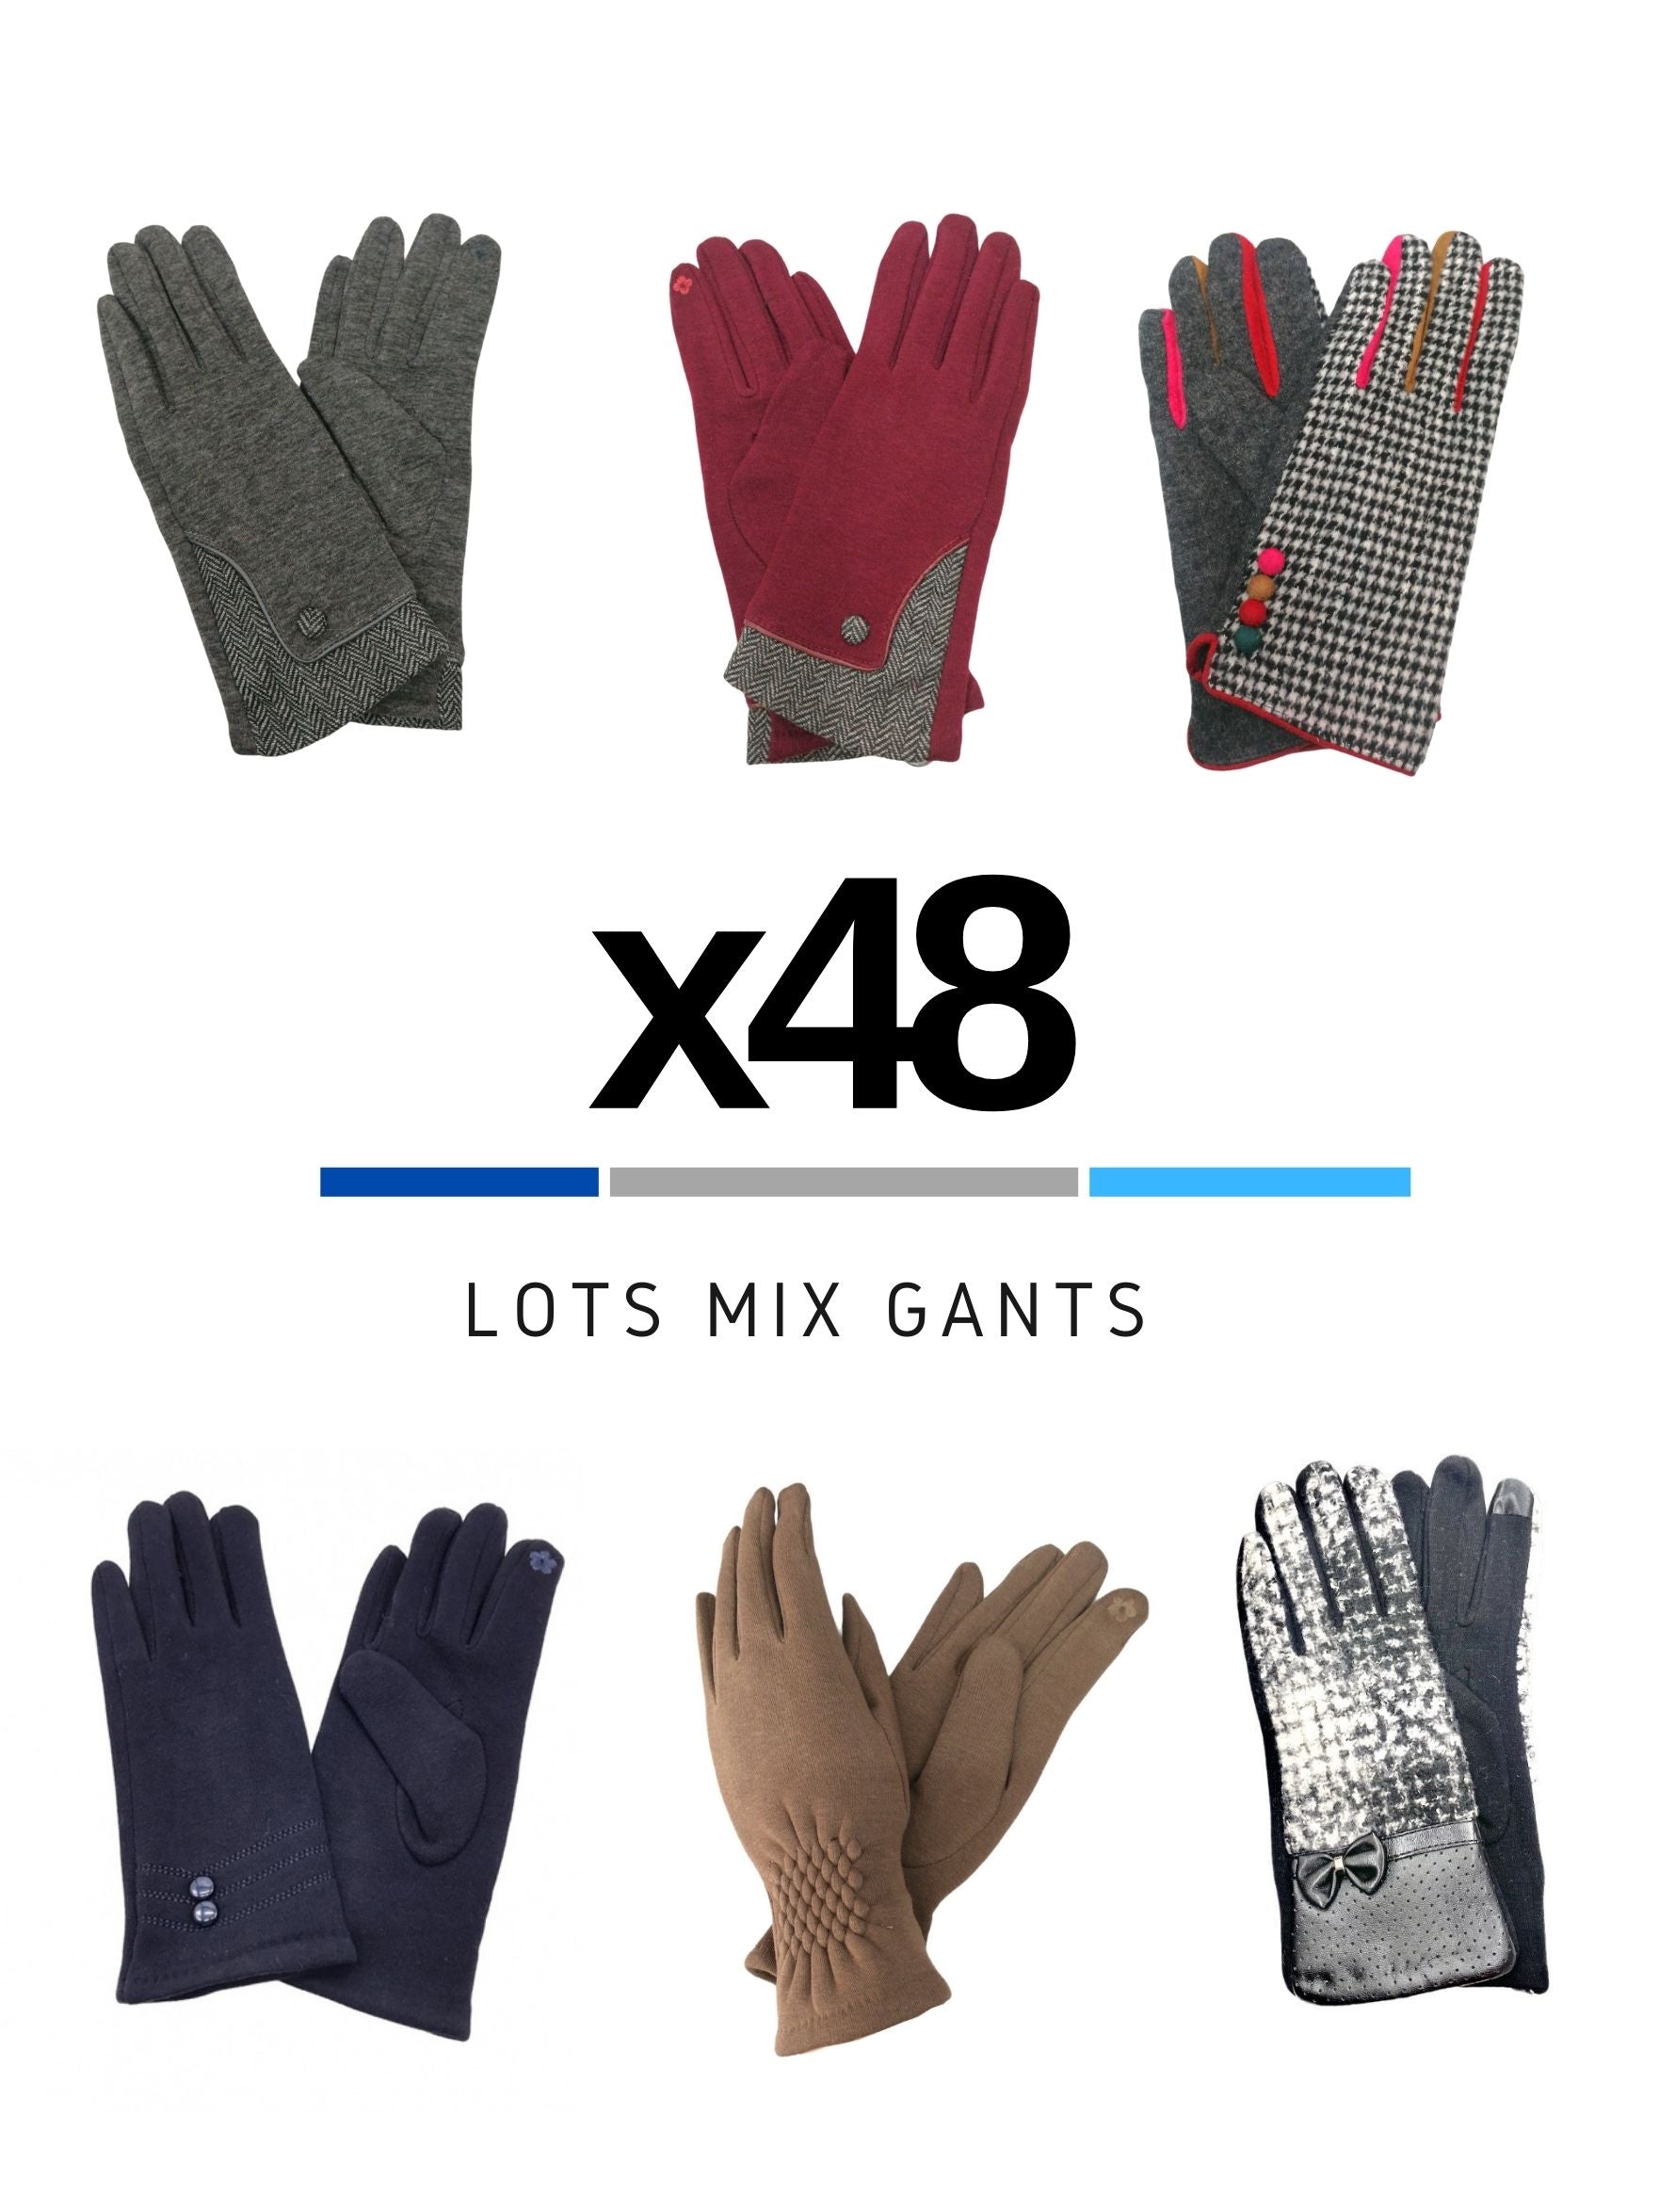 MAXI-LOT Mix mixed gloves (x48)